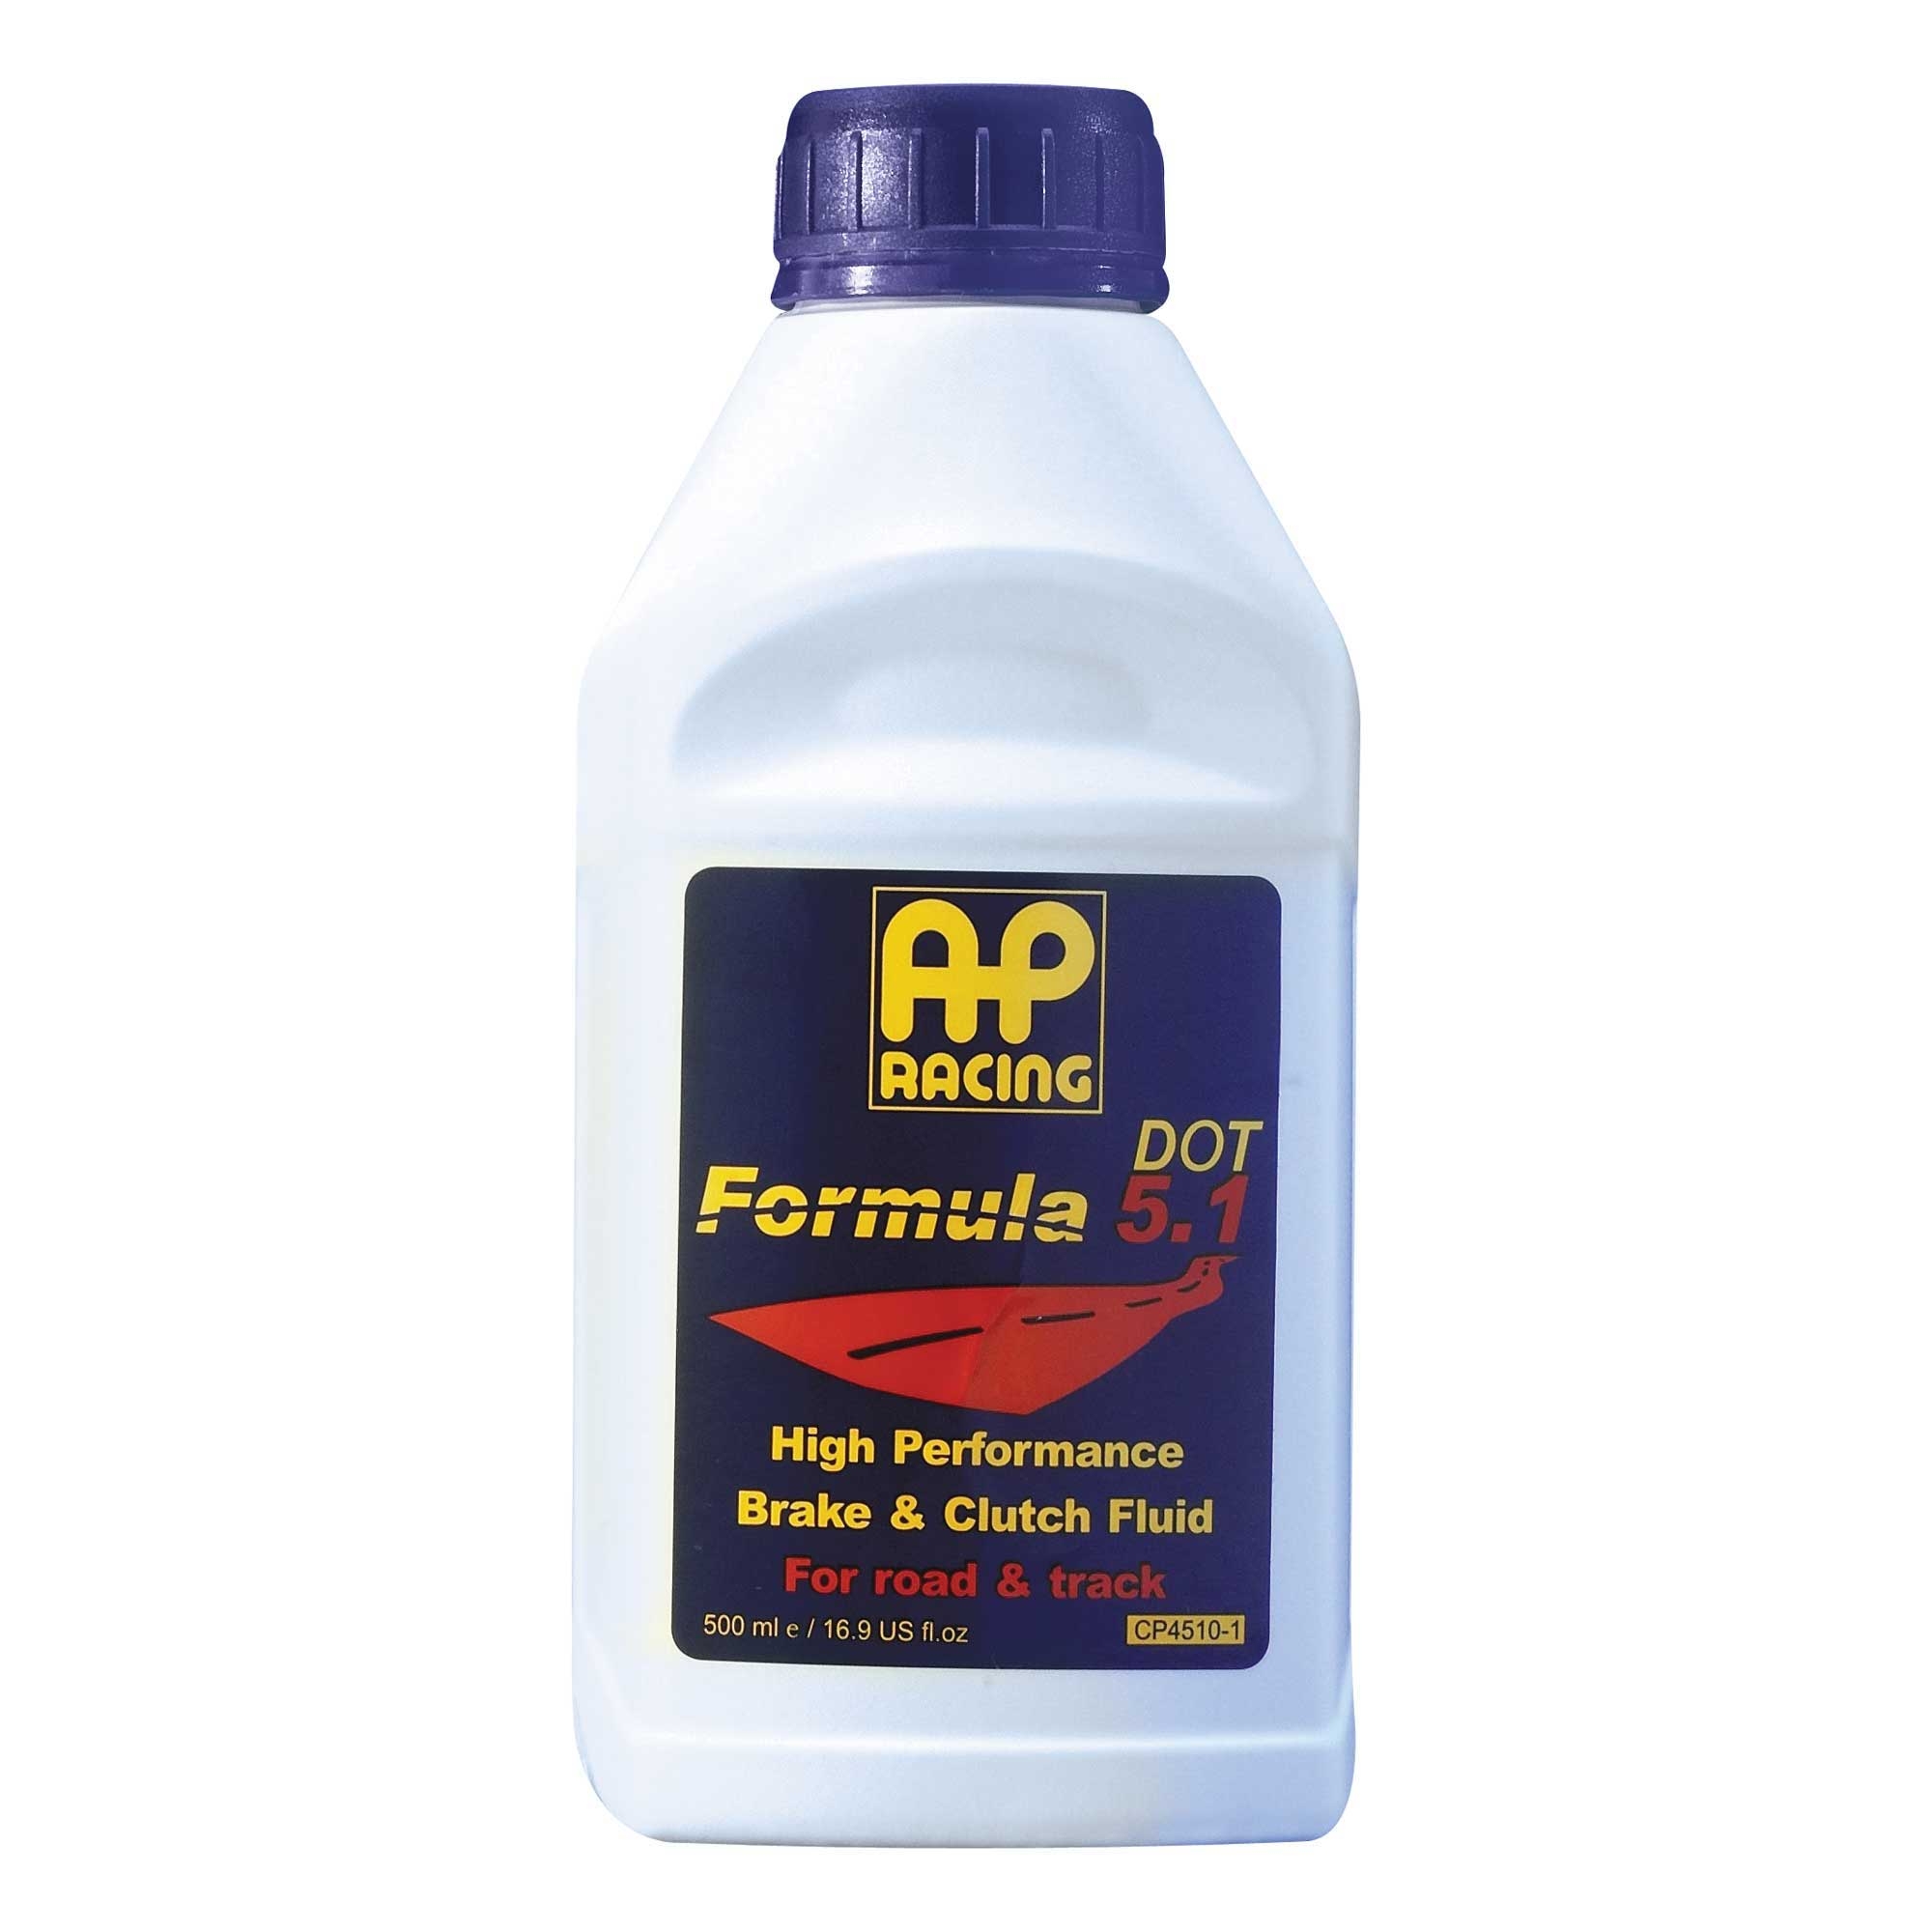 AP Racing Factory DOT 5.1 Performance Fluid - CP451